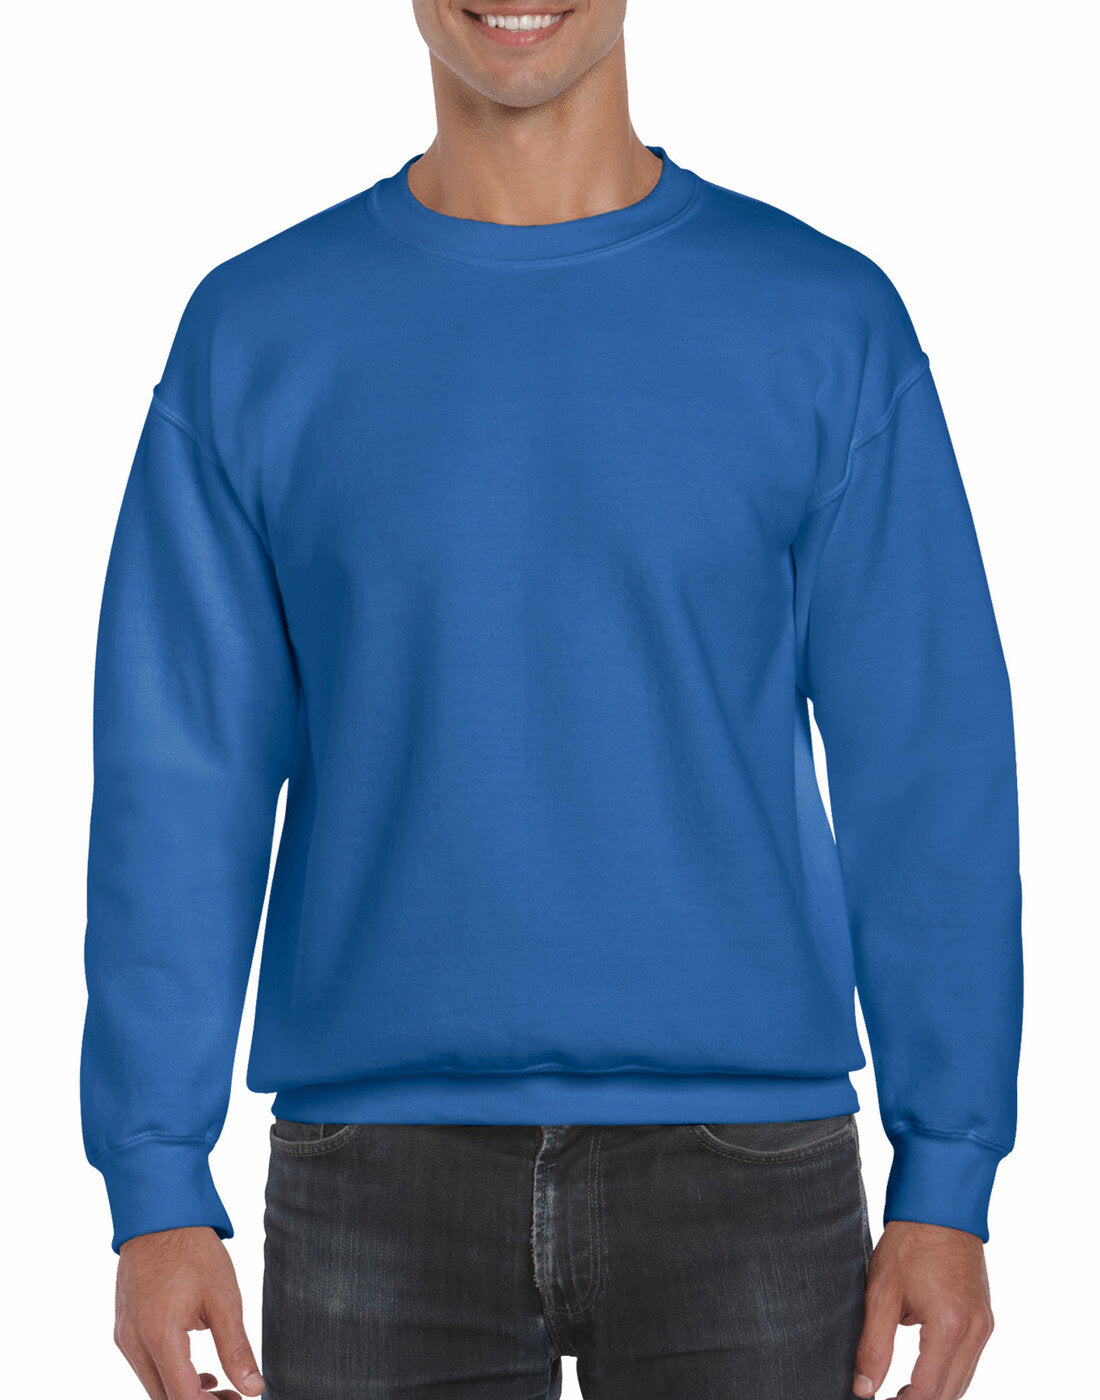 Gildan Dryblend Adult Crew Neck Sweatshirt - Royal Blue